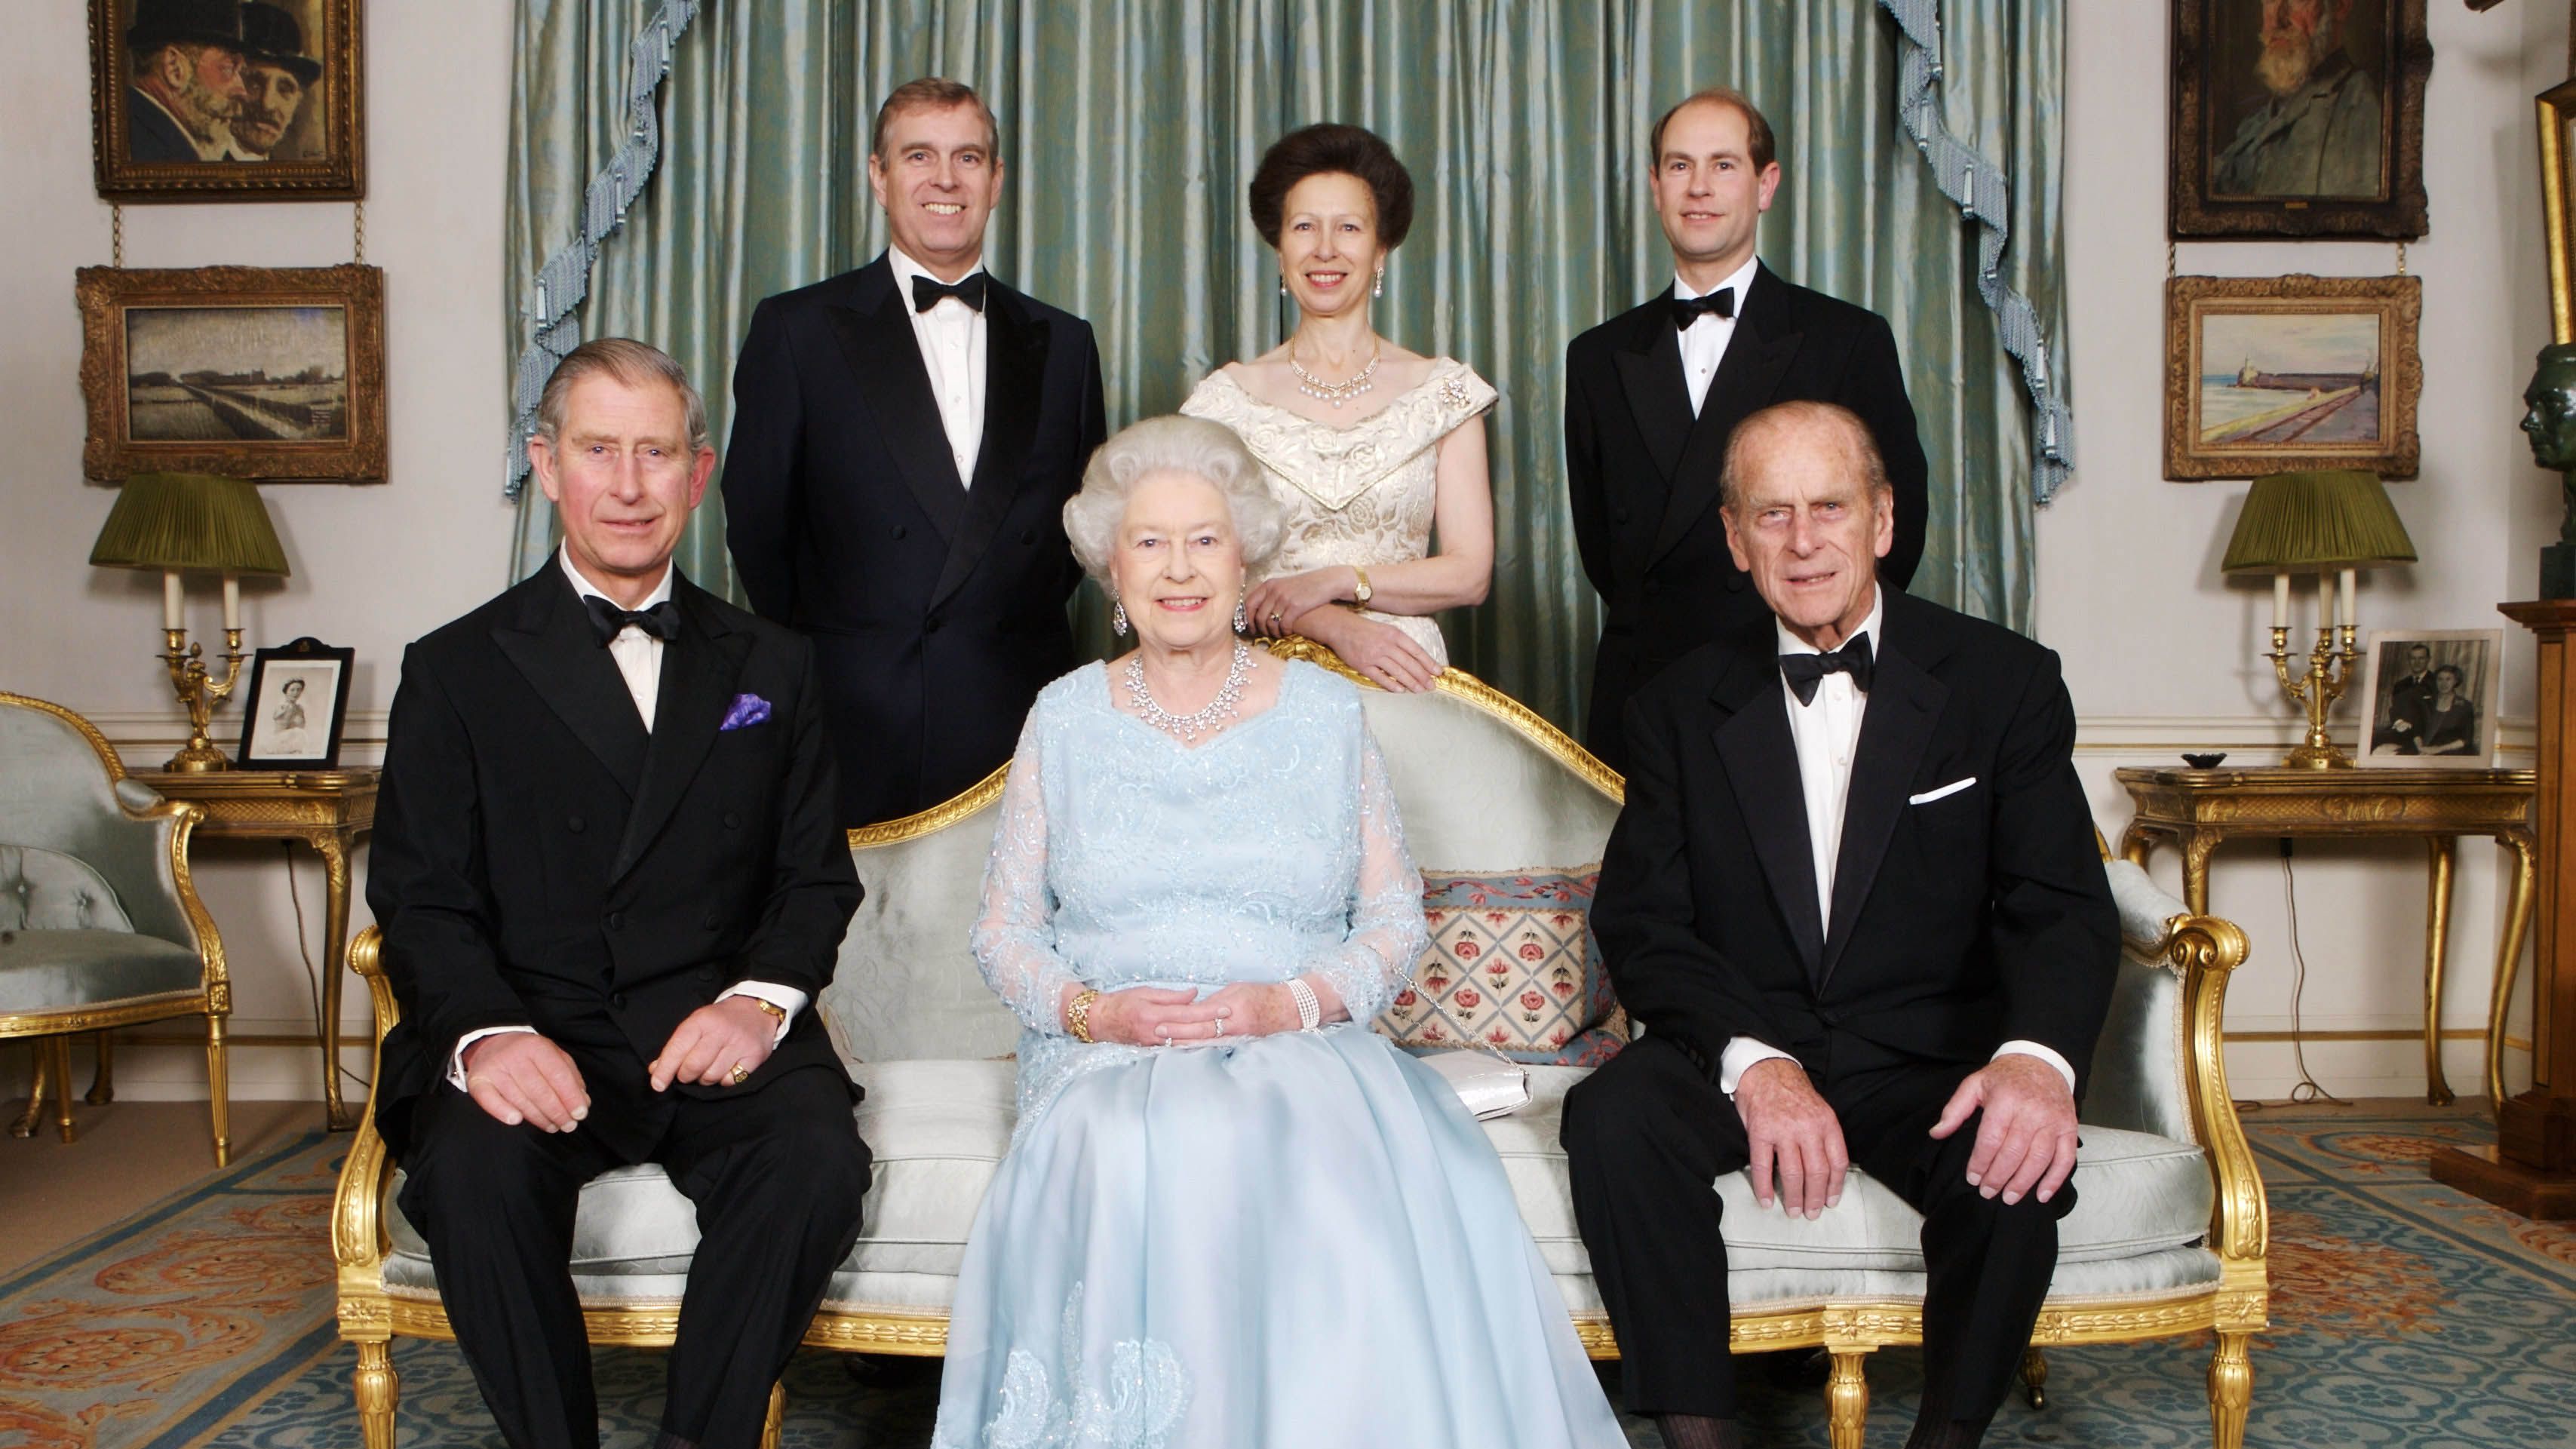 Son 2019 Ki Xxx Video Full Hd - Queen Elizabeth II's Children: All About The Royals' Relationships